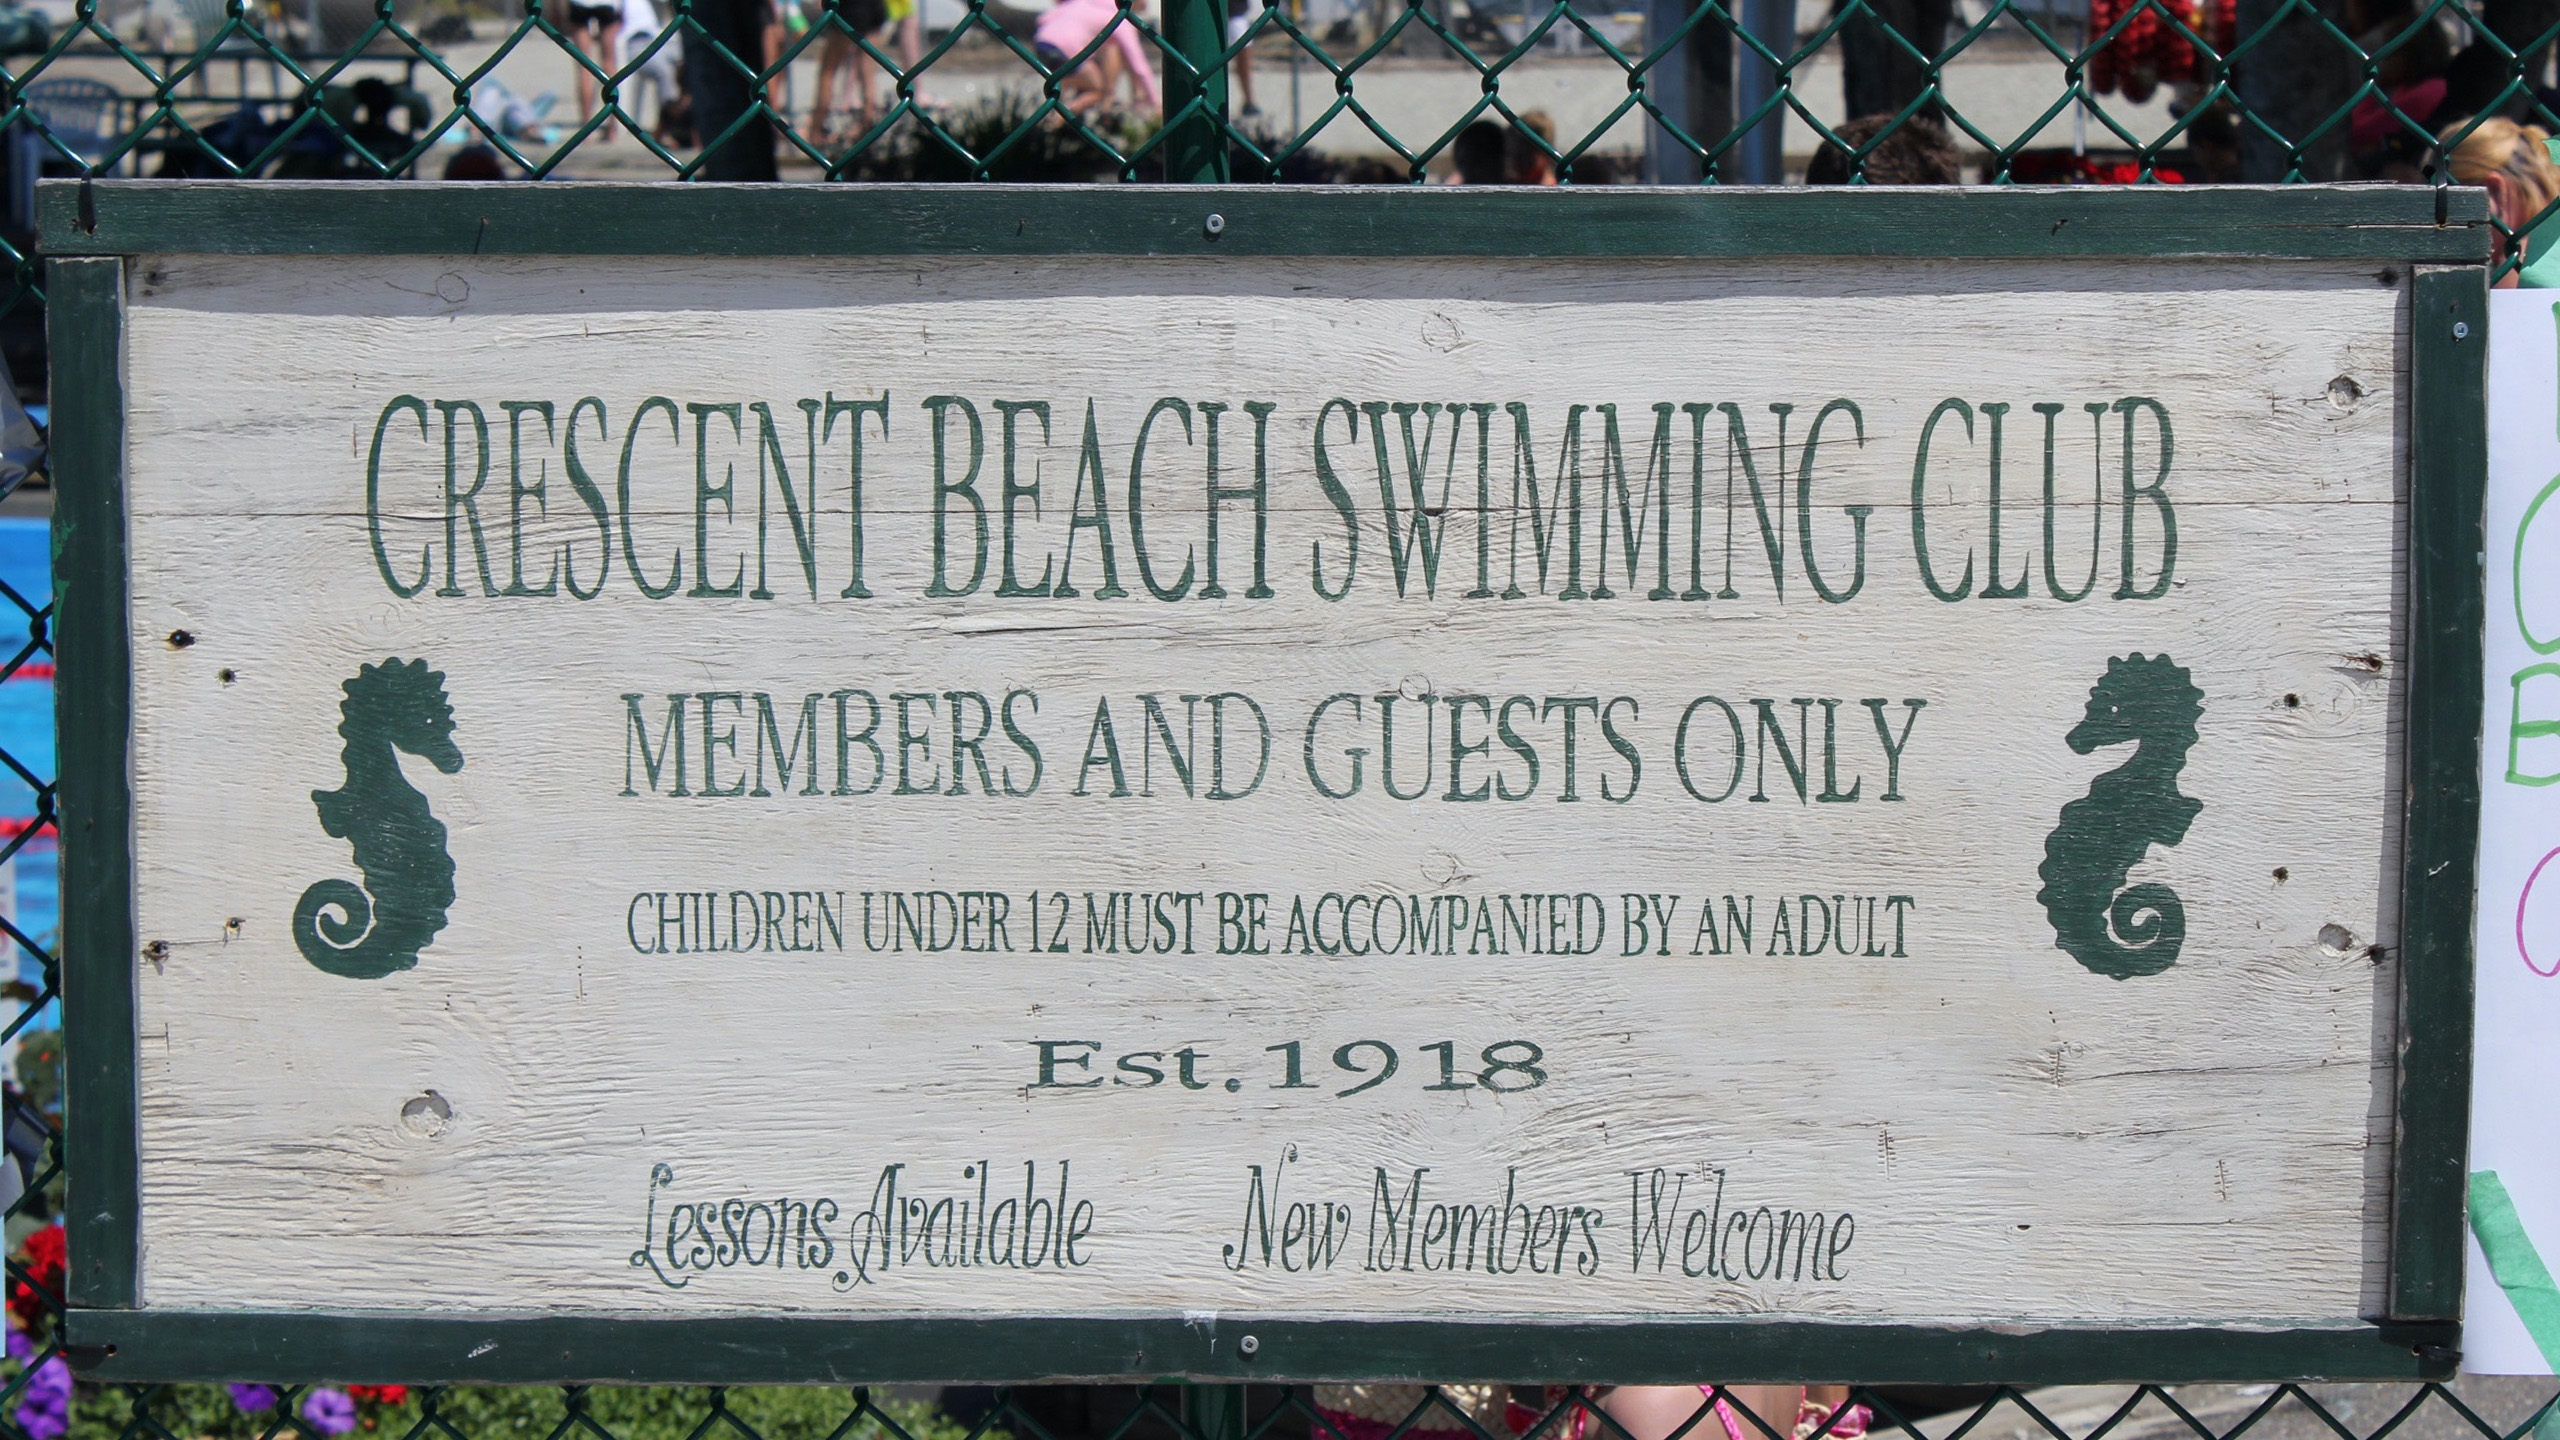 Crescent Beach Swimming Club established 1918